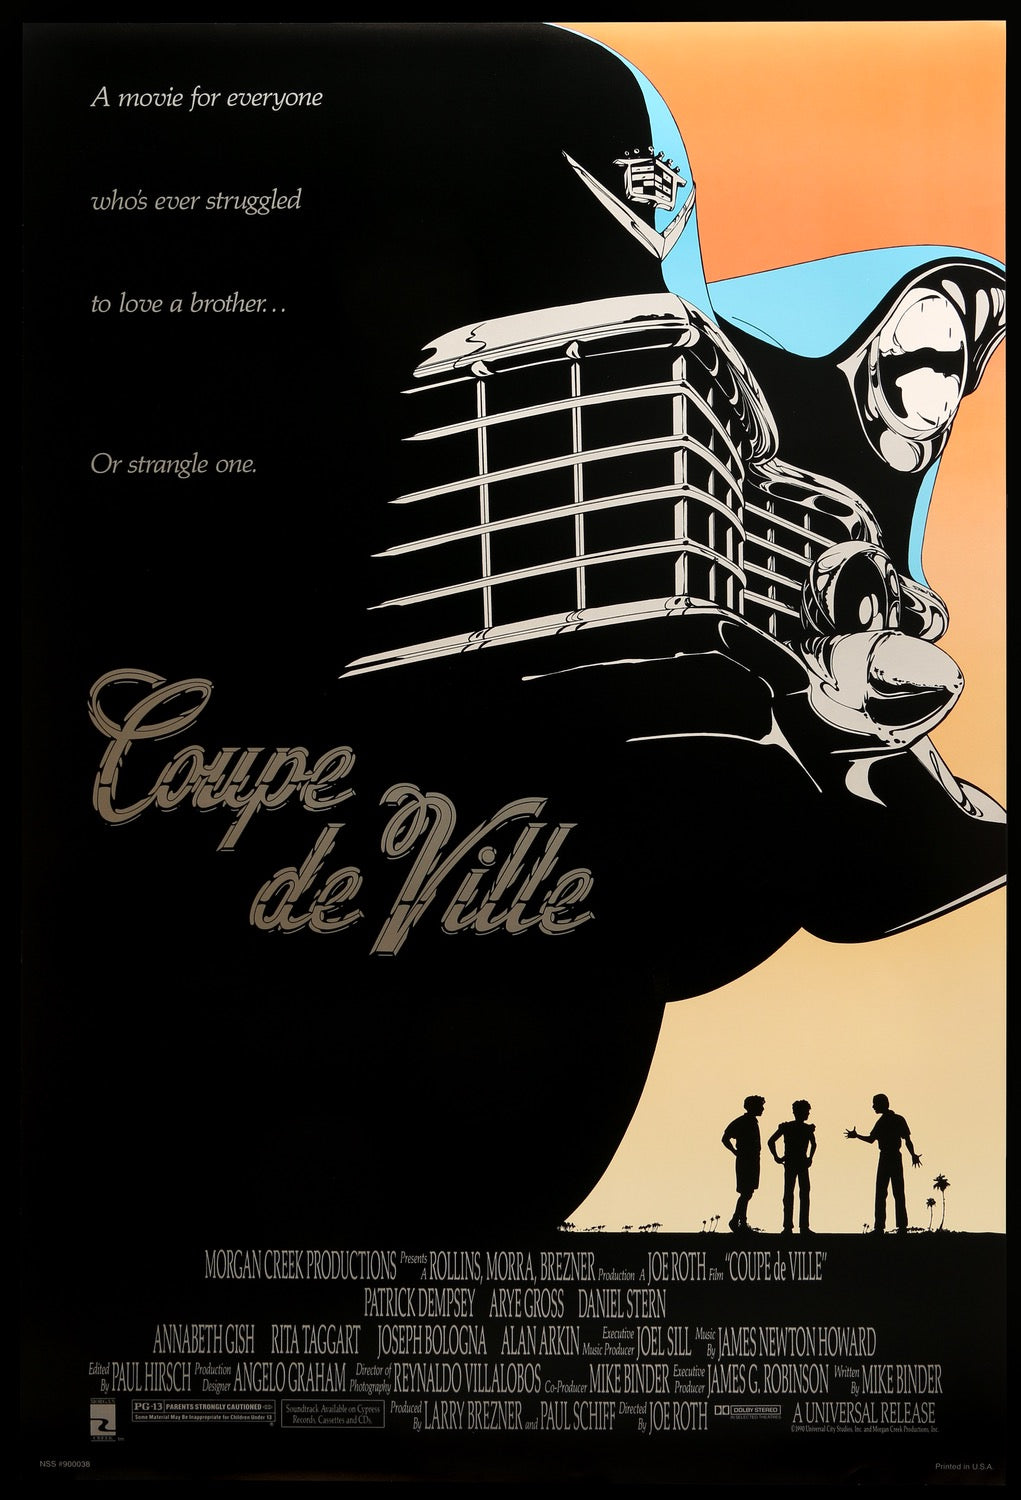 Coupe De Ville (1990) original movie poster for sale at Original Film Art